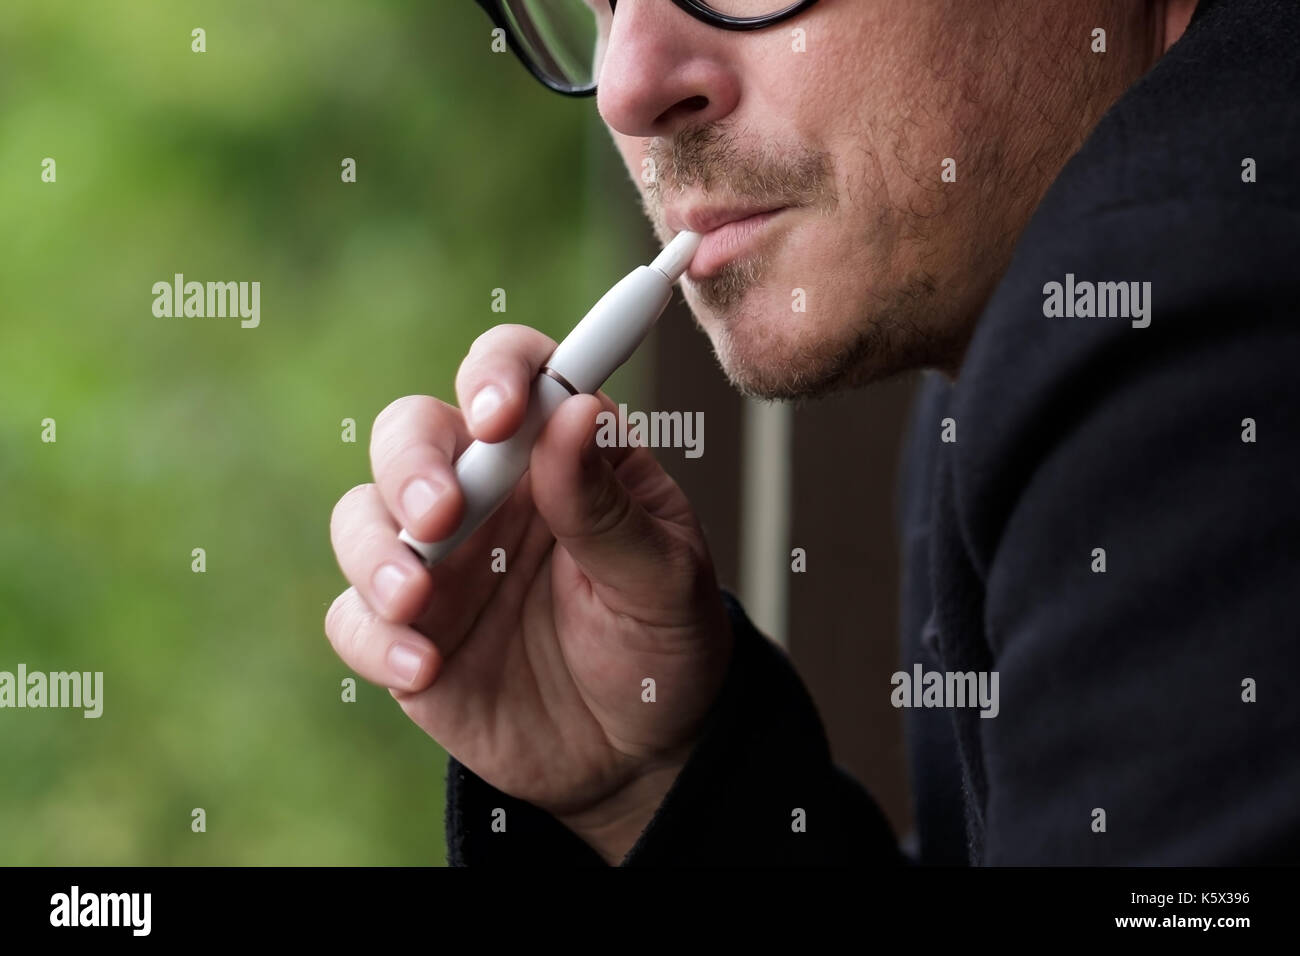 Caucasian man smoking modern hybrid cigarette device outdoor Stock Photo